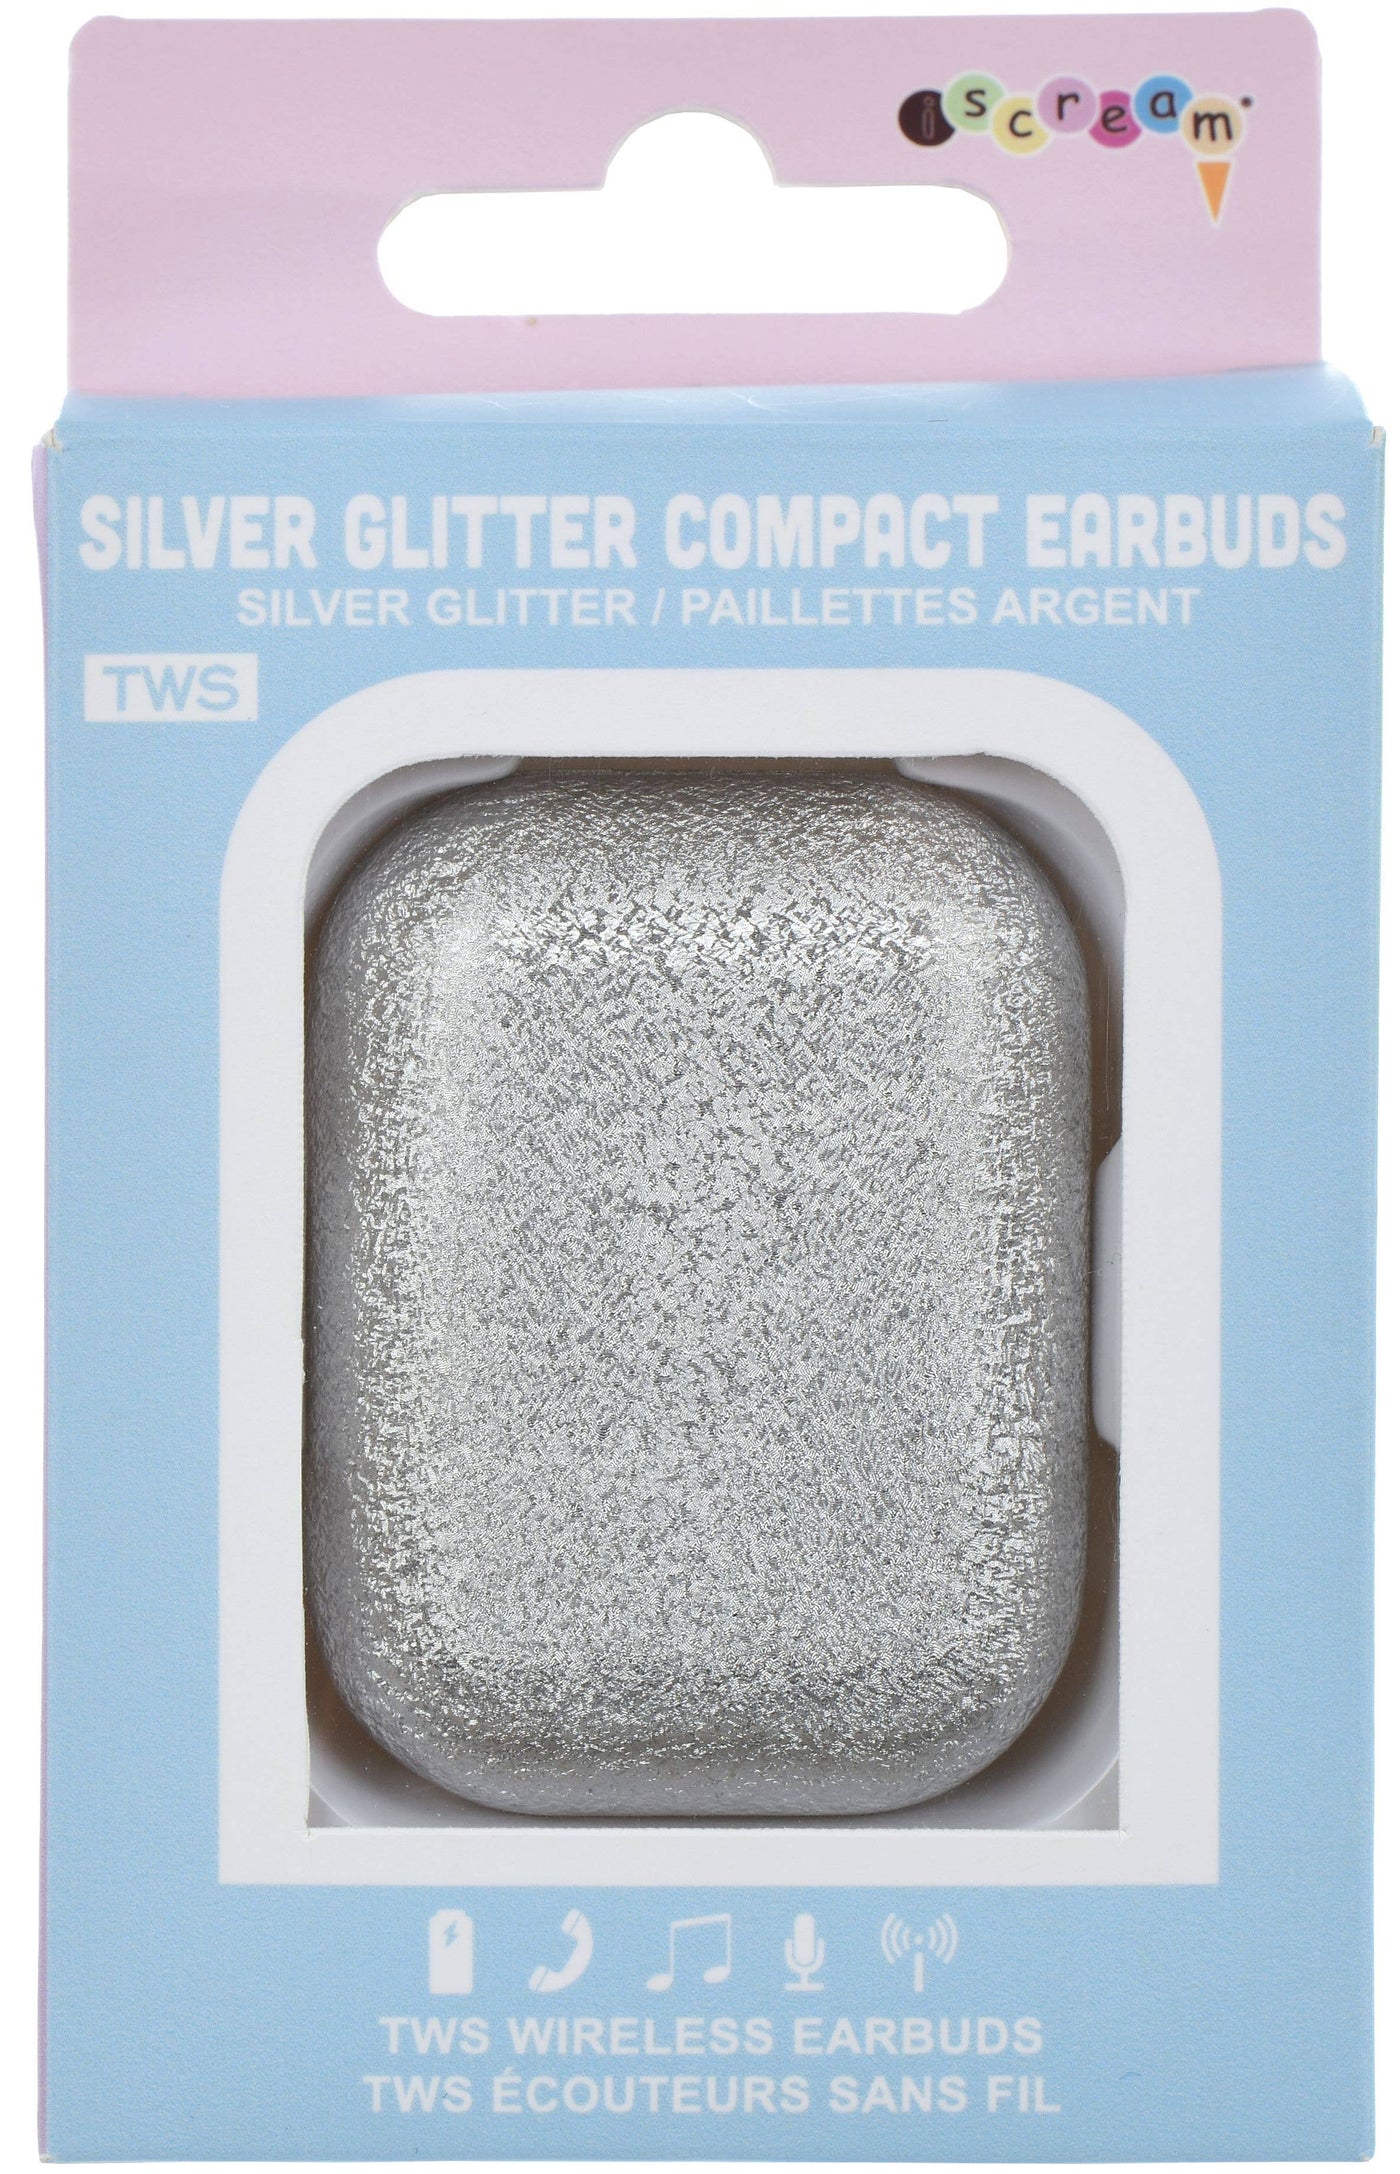 Iscream - Silver Glitter Compact Ear Buds